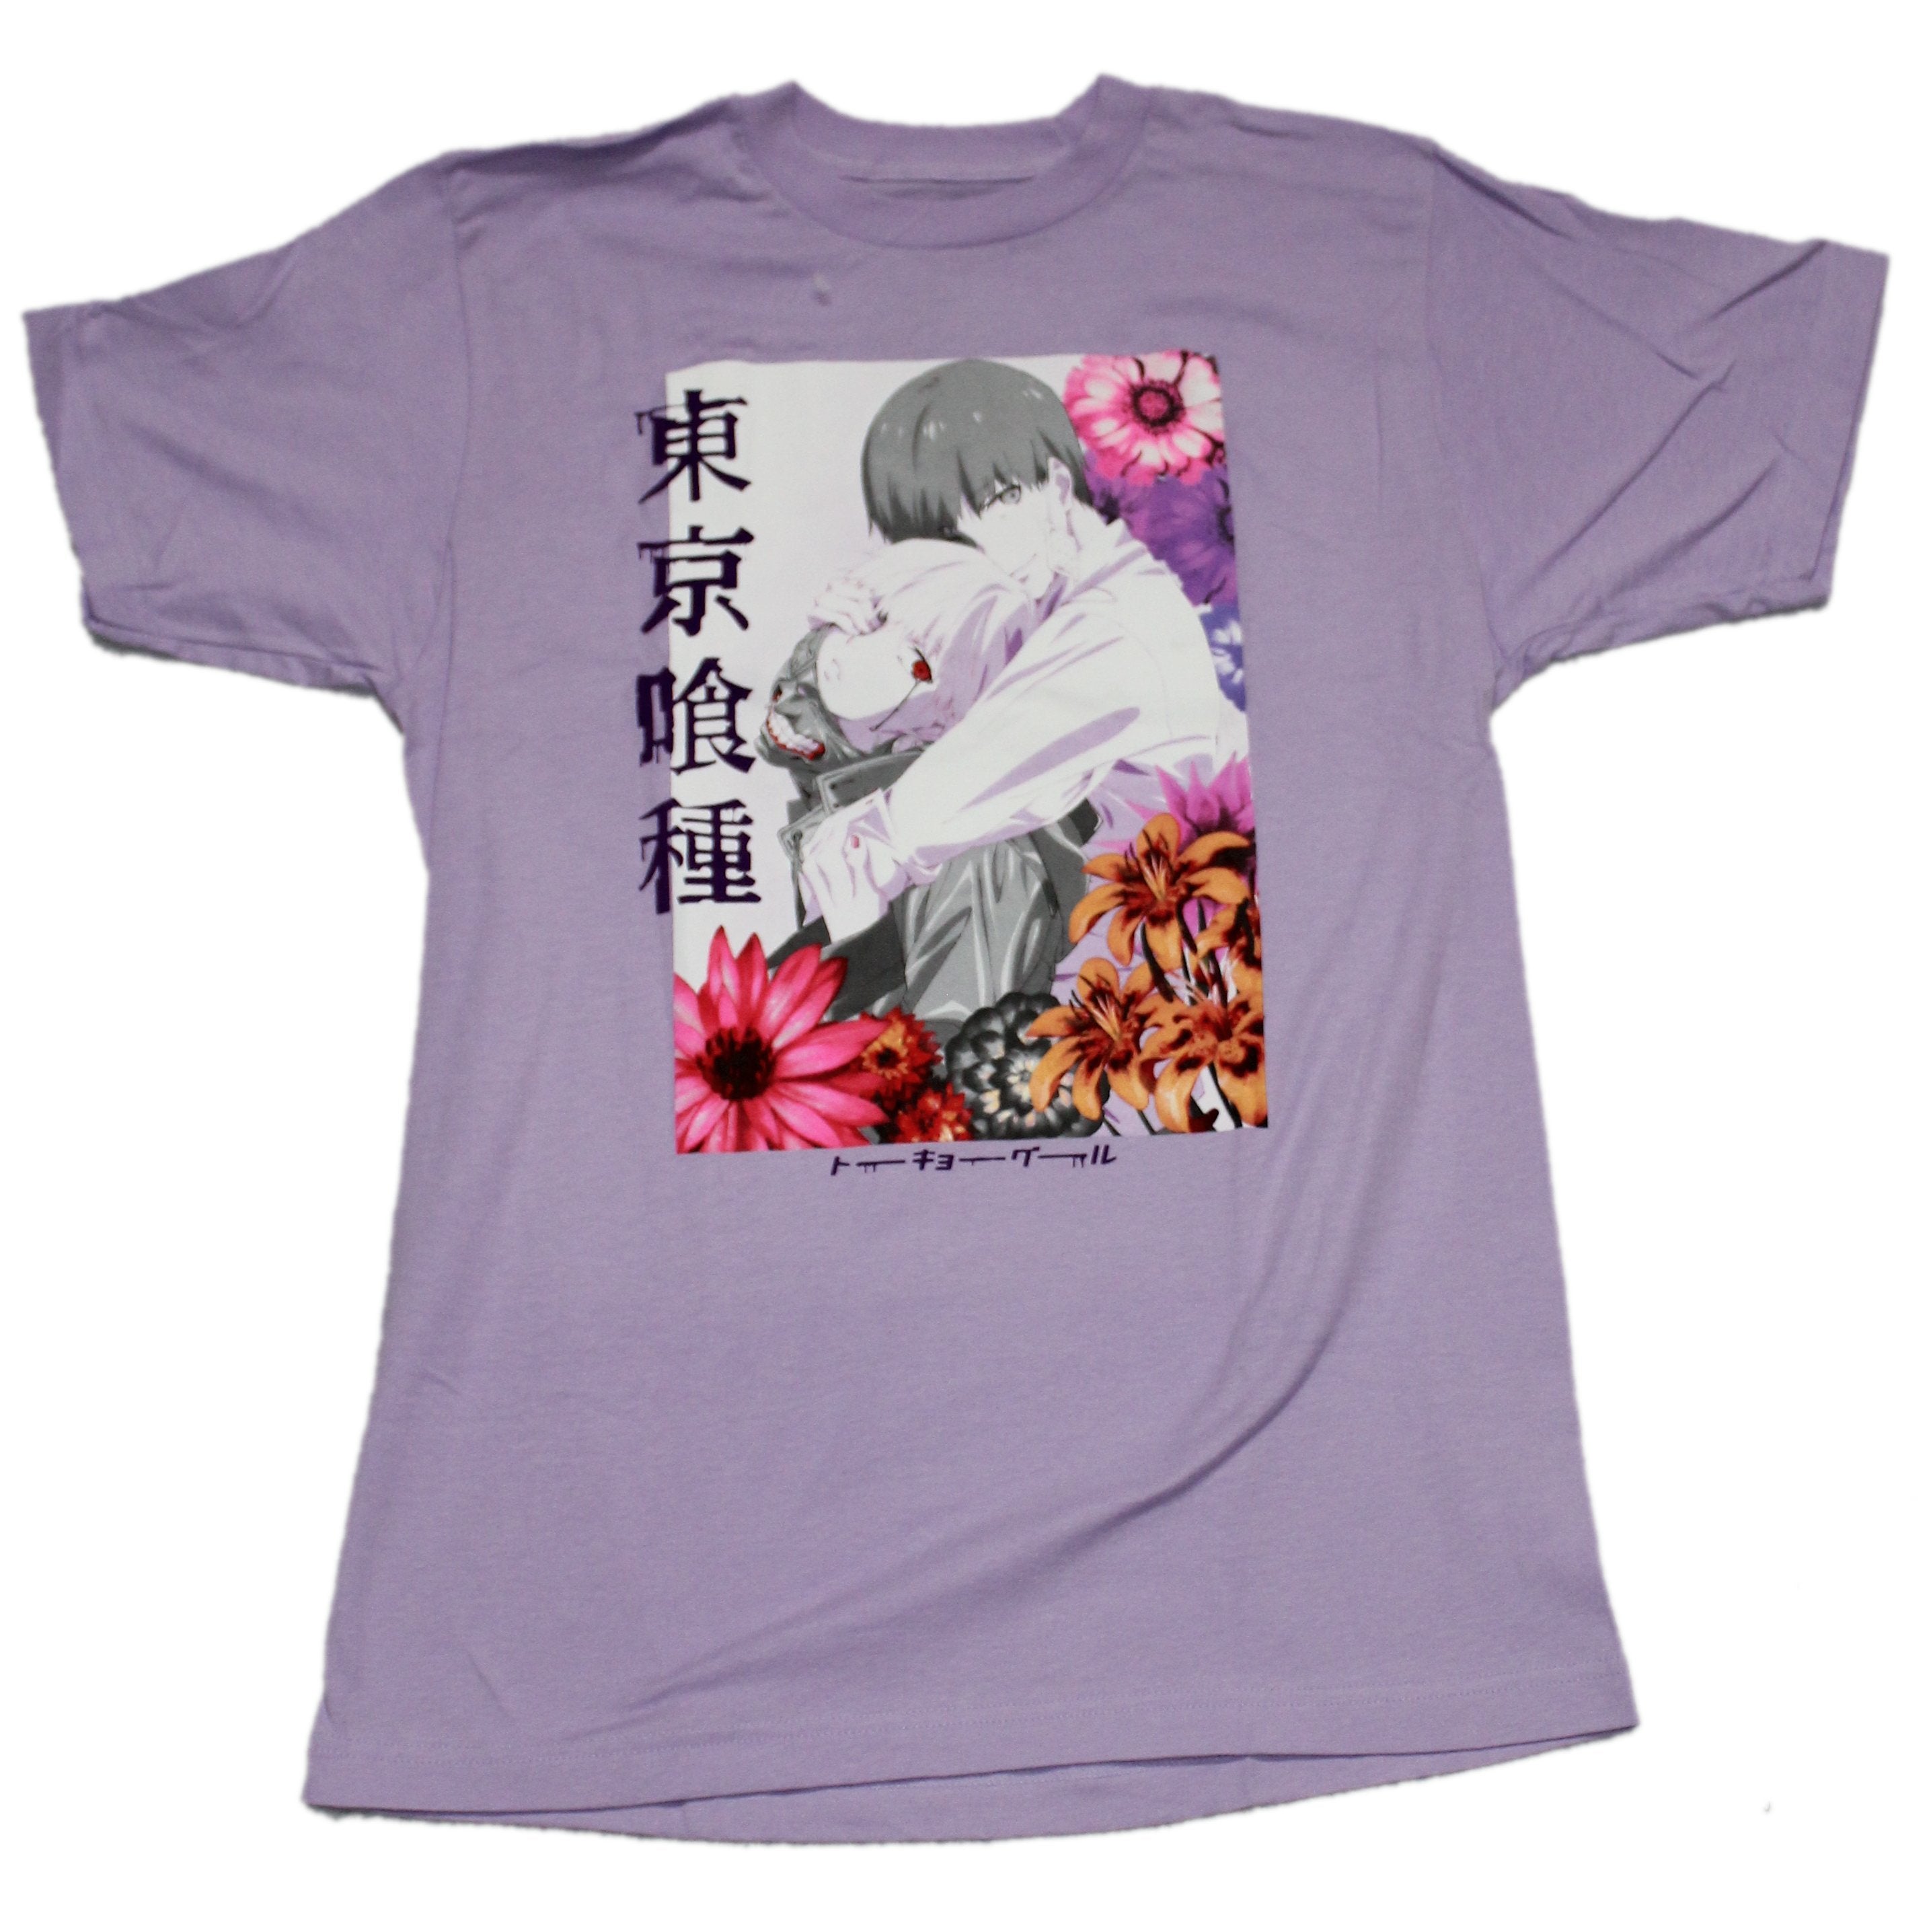 Tokyo Ghoul Mens T-Shirt - Flowered Kanji Box Duo Image